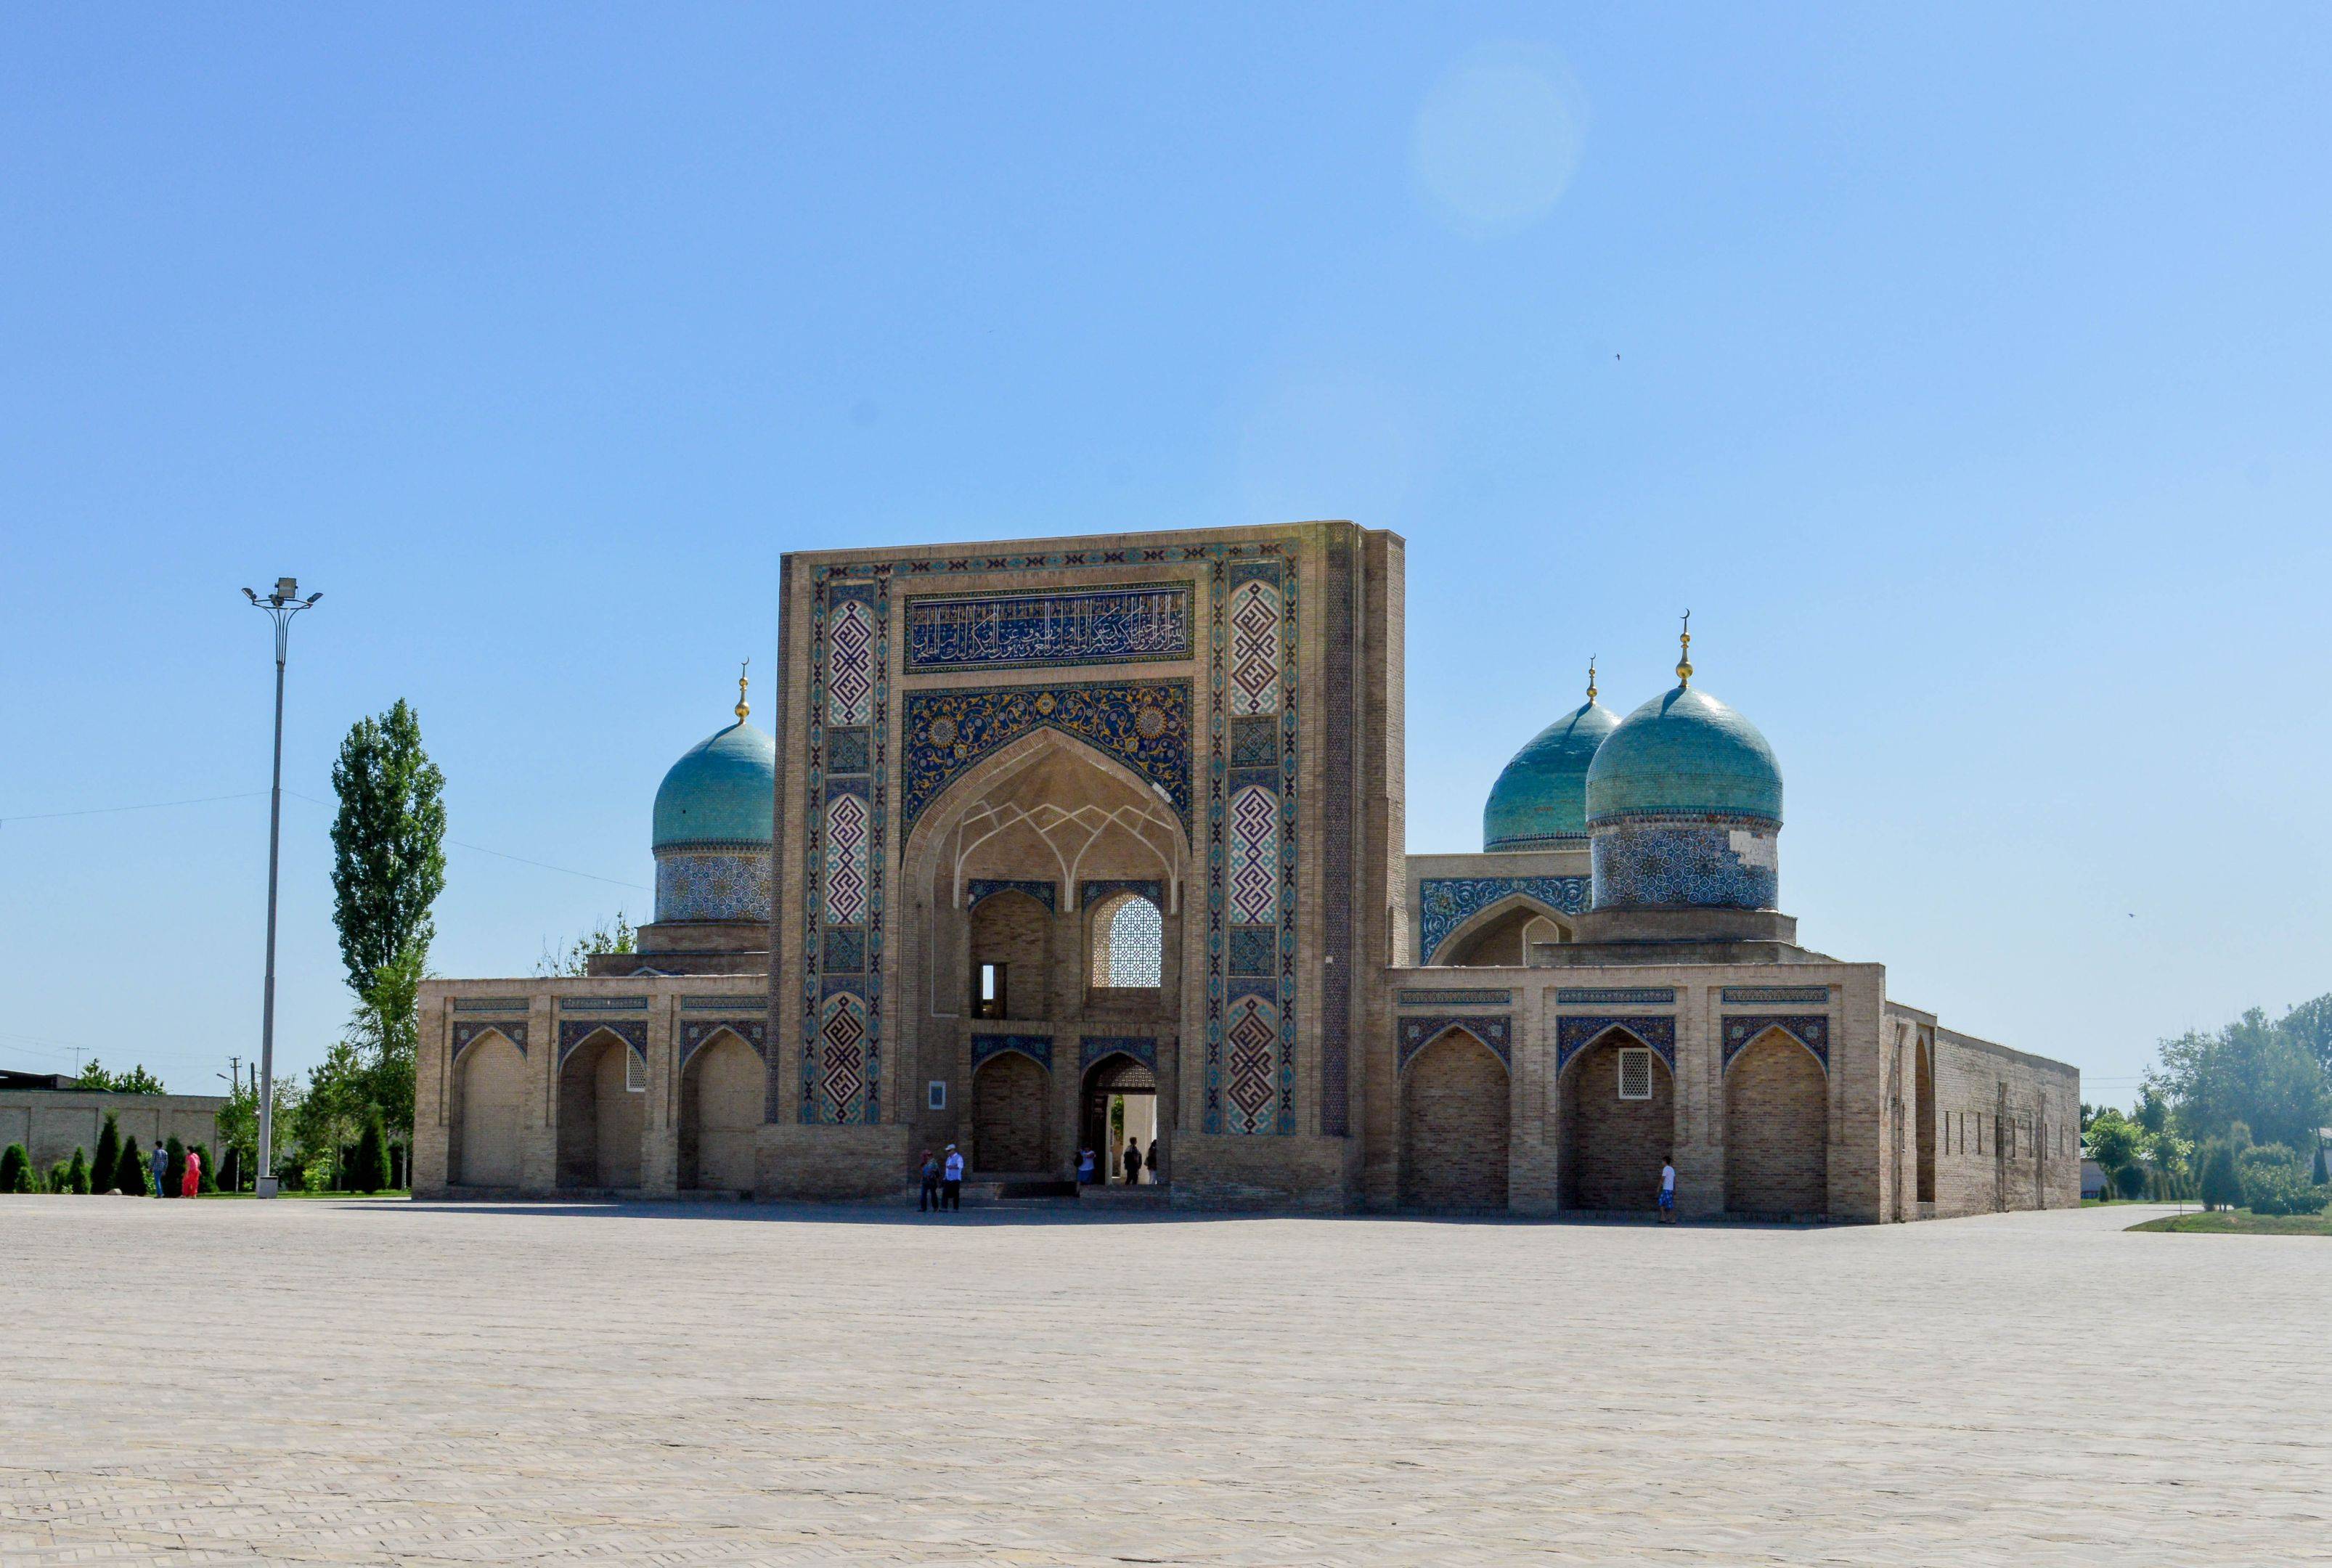 Benvenuti in Uzbekistan